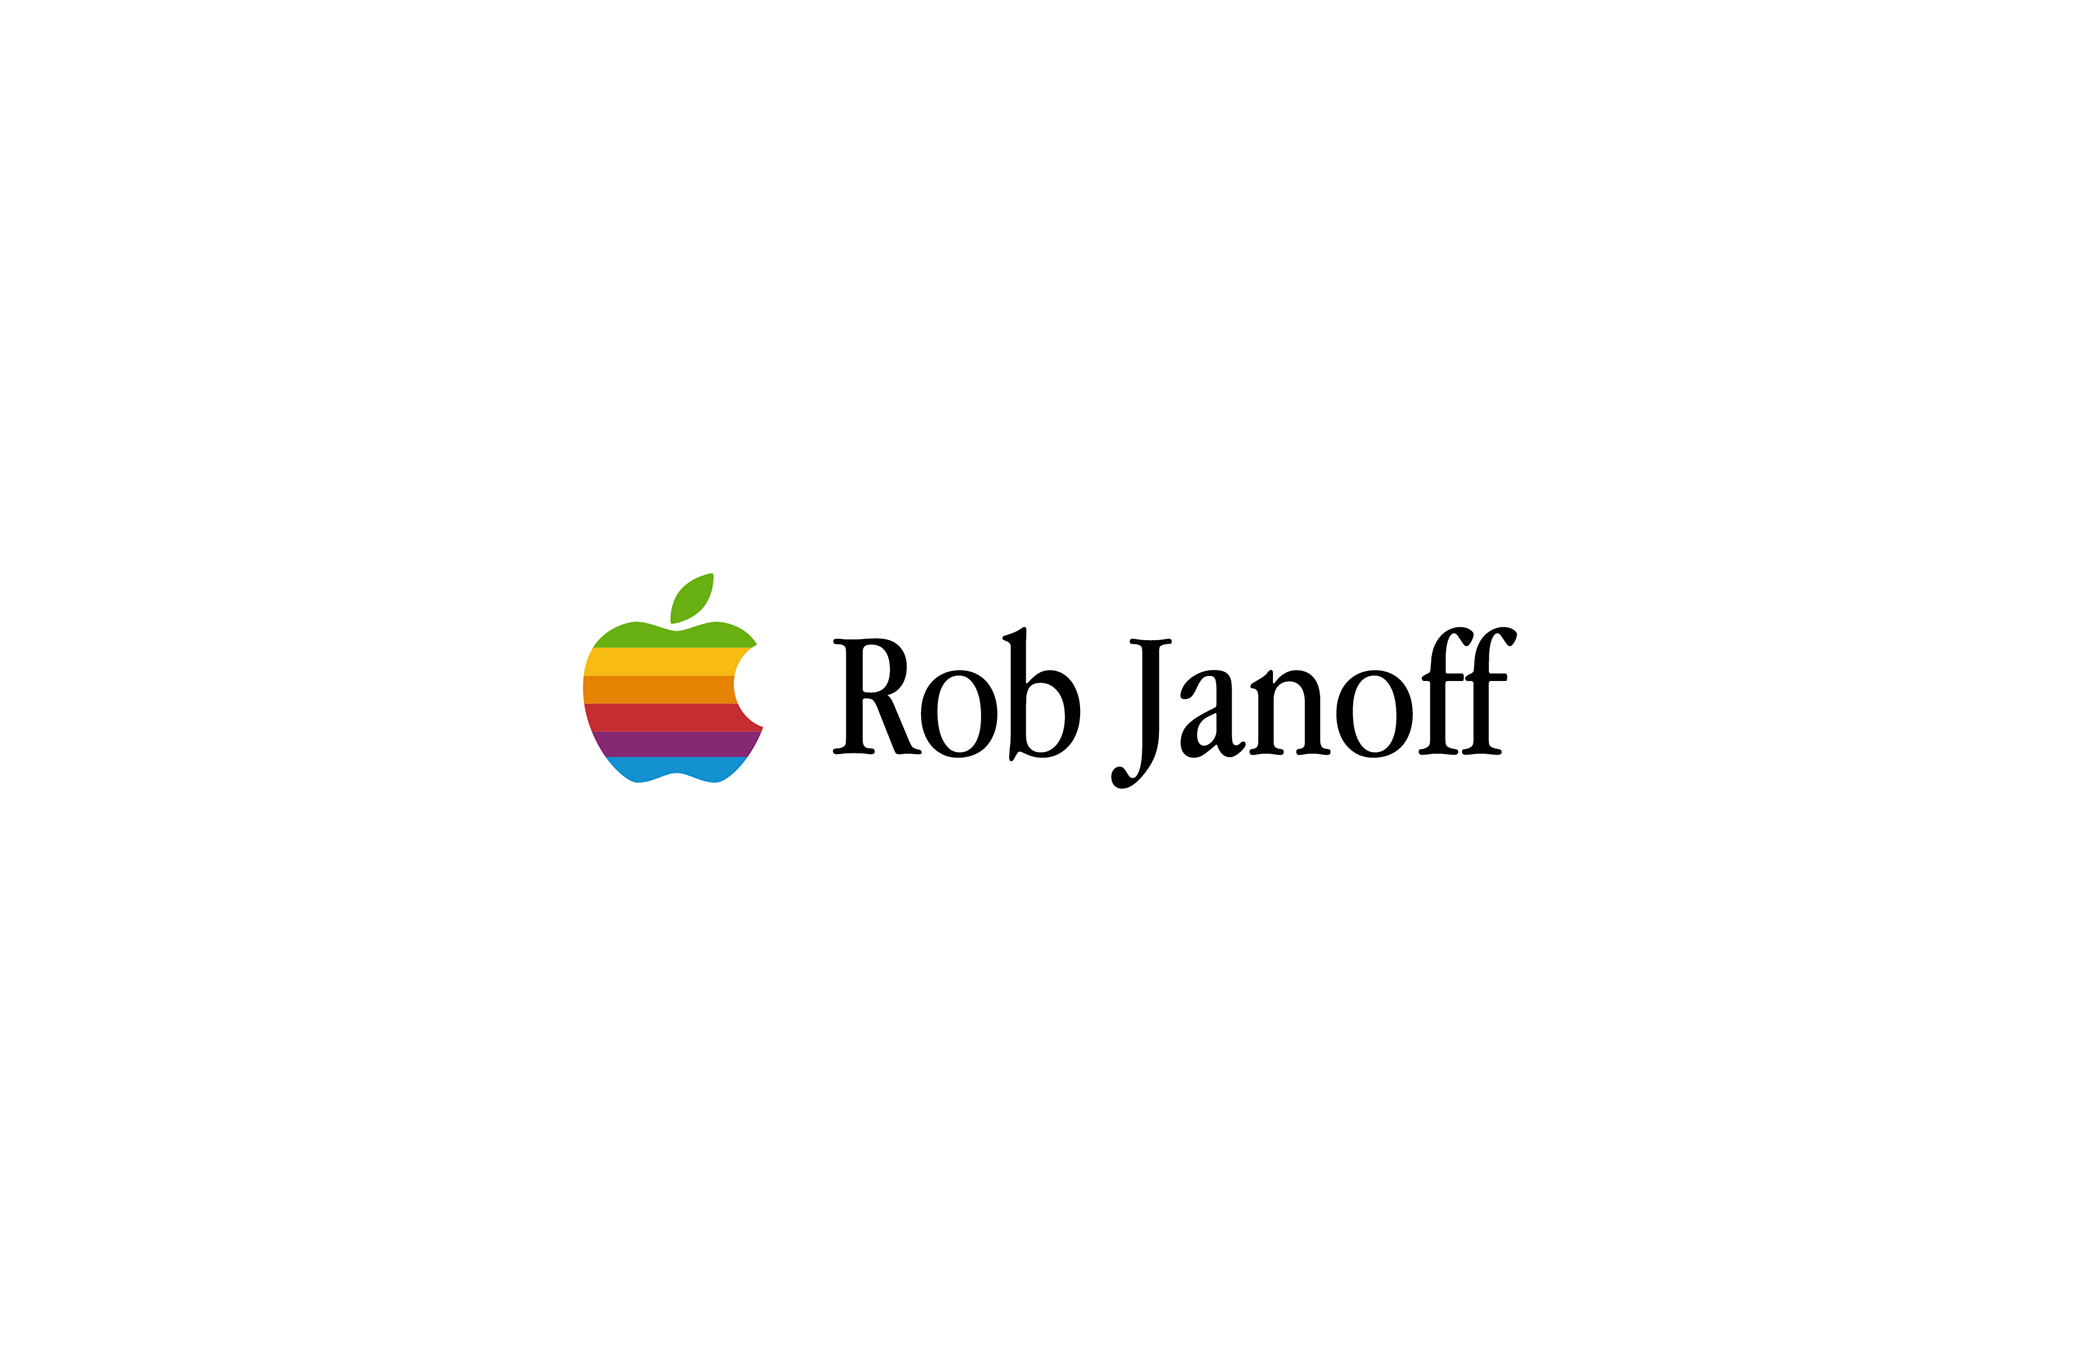 Rob Janoff - Designer of the Apple logo